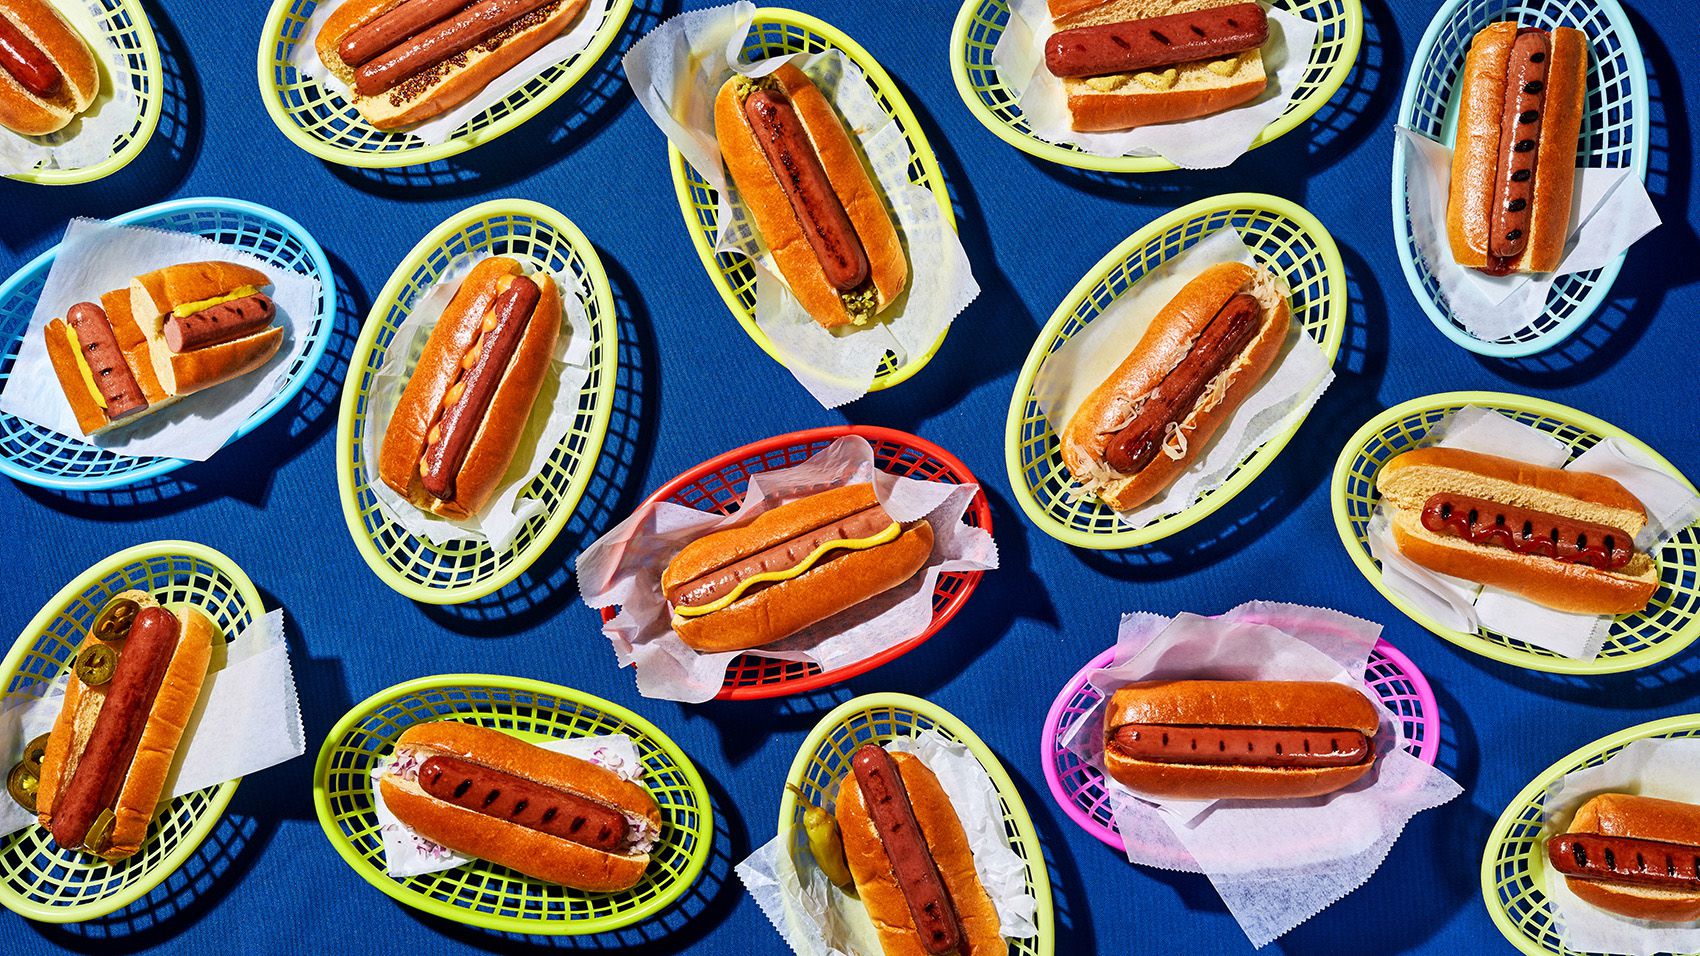 Coney hot dog roller countertop Ball Park Franks